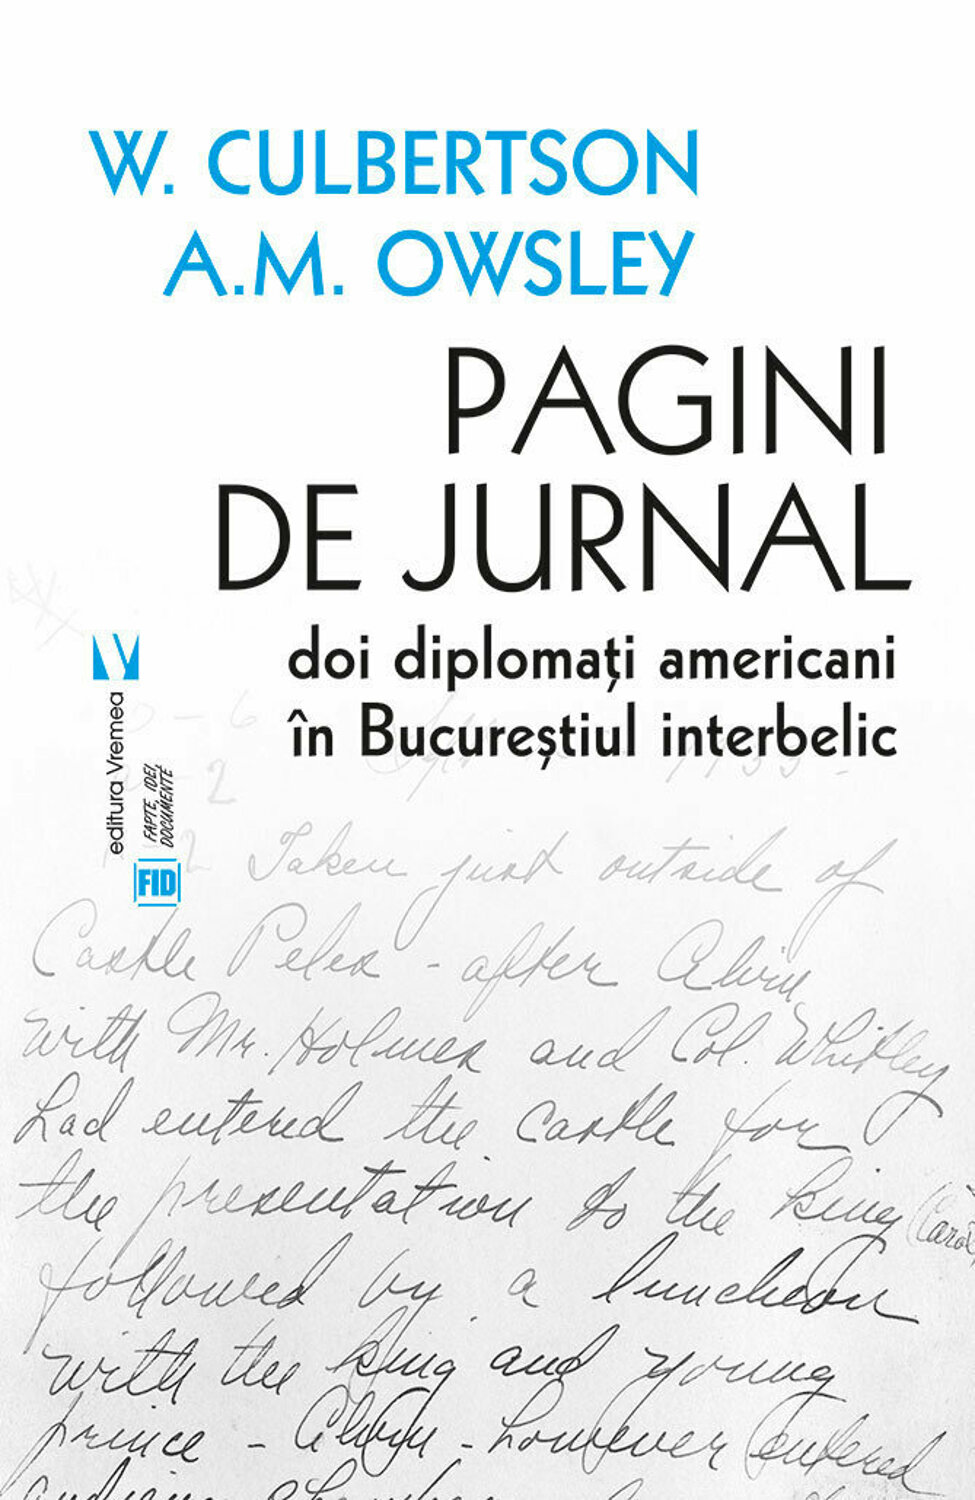 W. CULBERTSON, A.M. OWSLEY | Pagini de jurnal   Doi diplomati americani in Bucurestiul interbelic